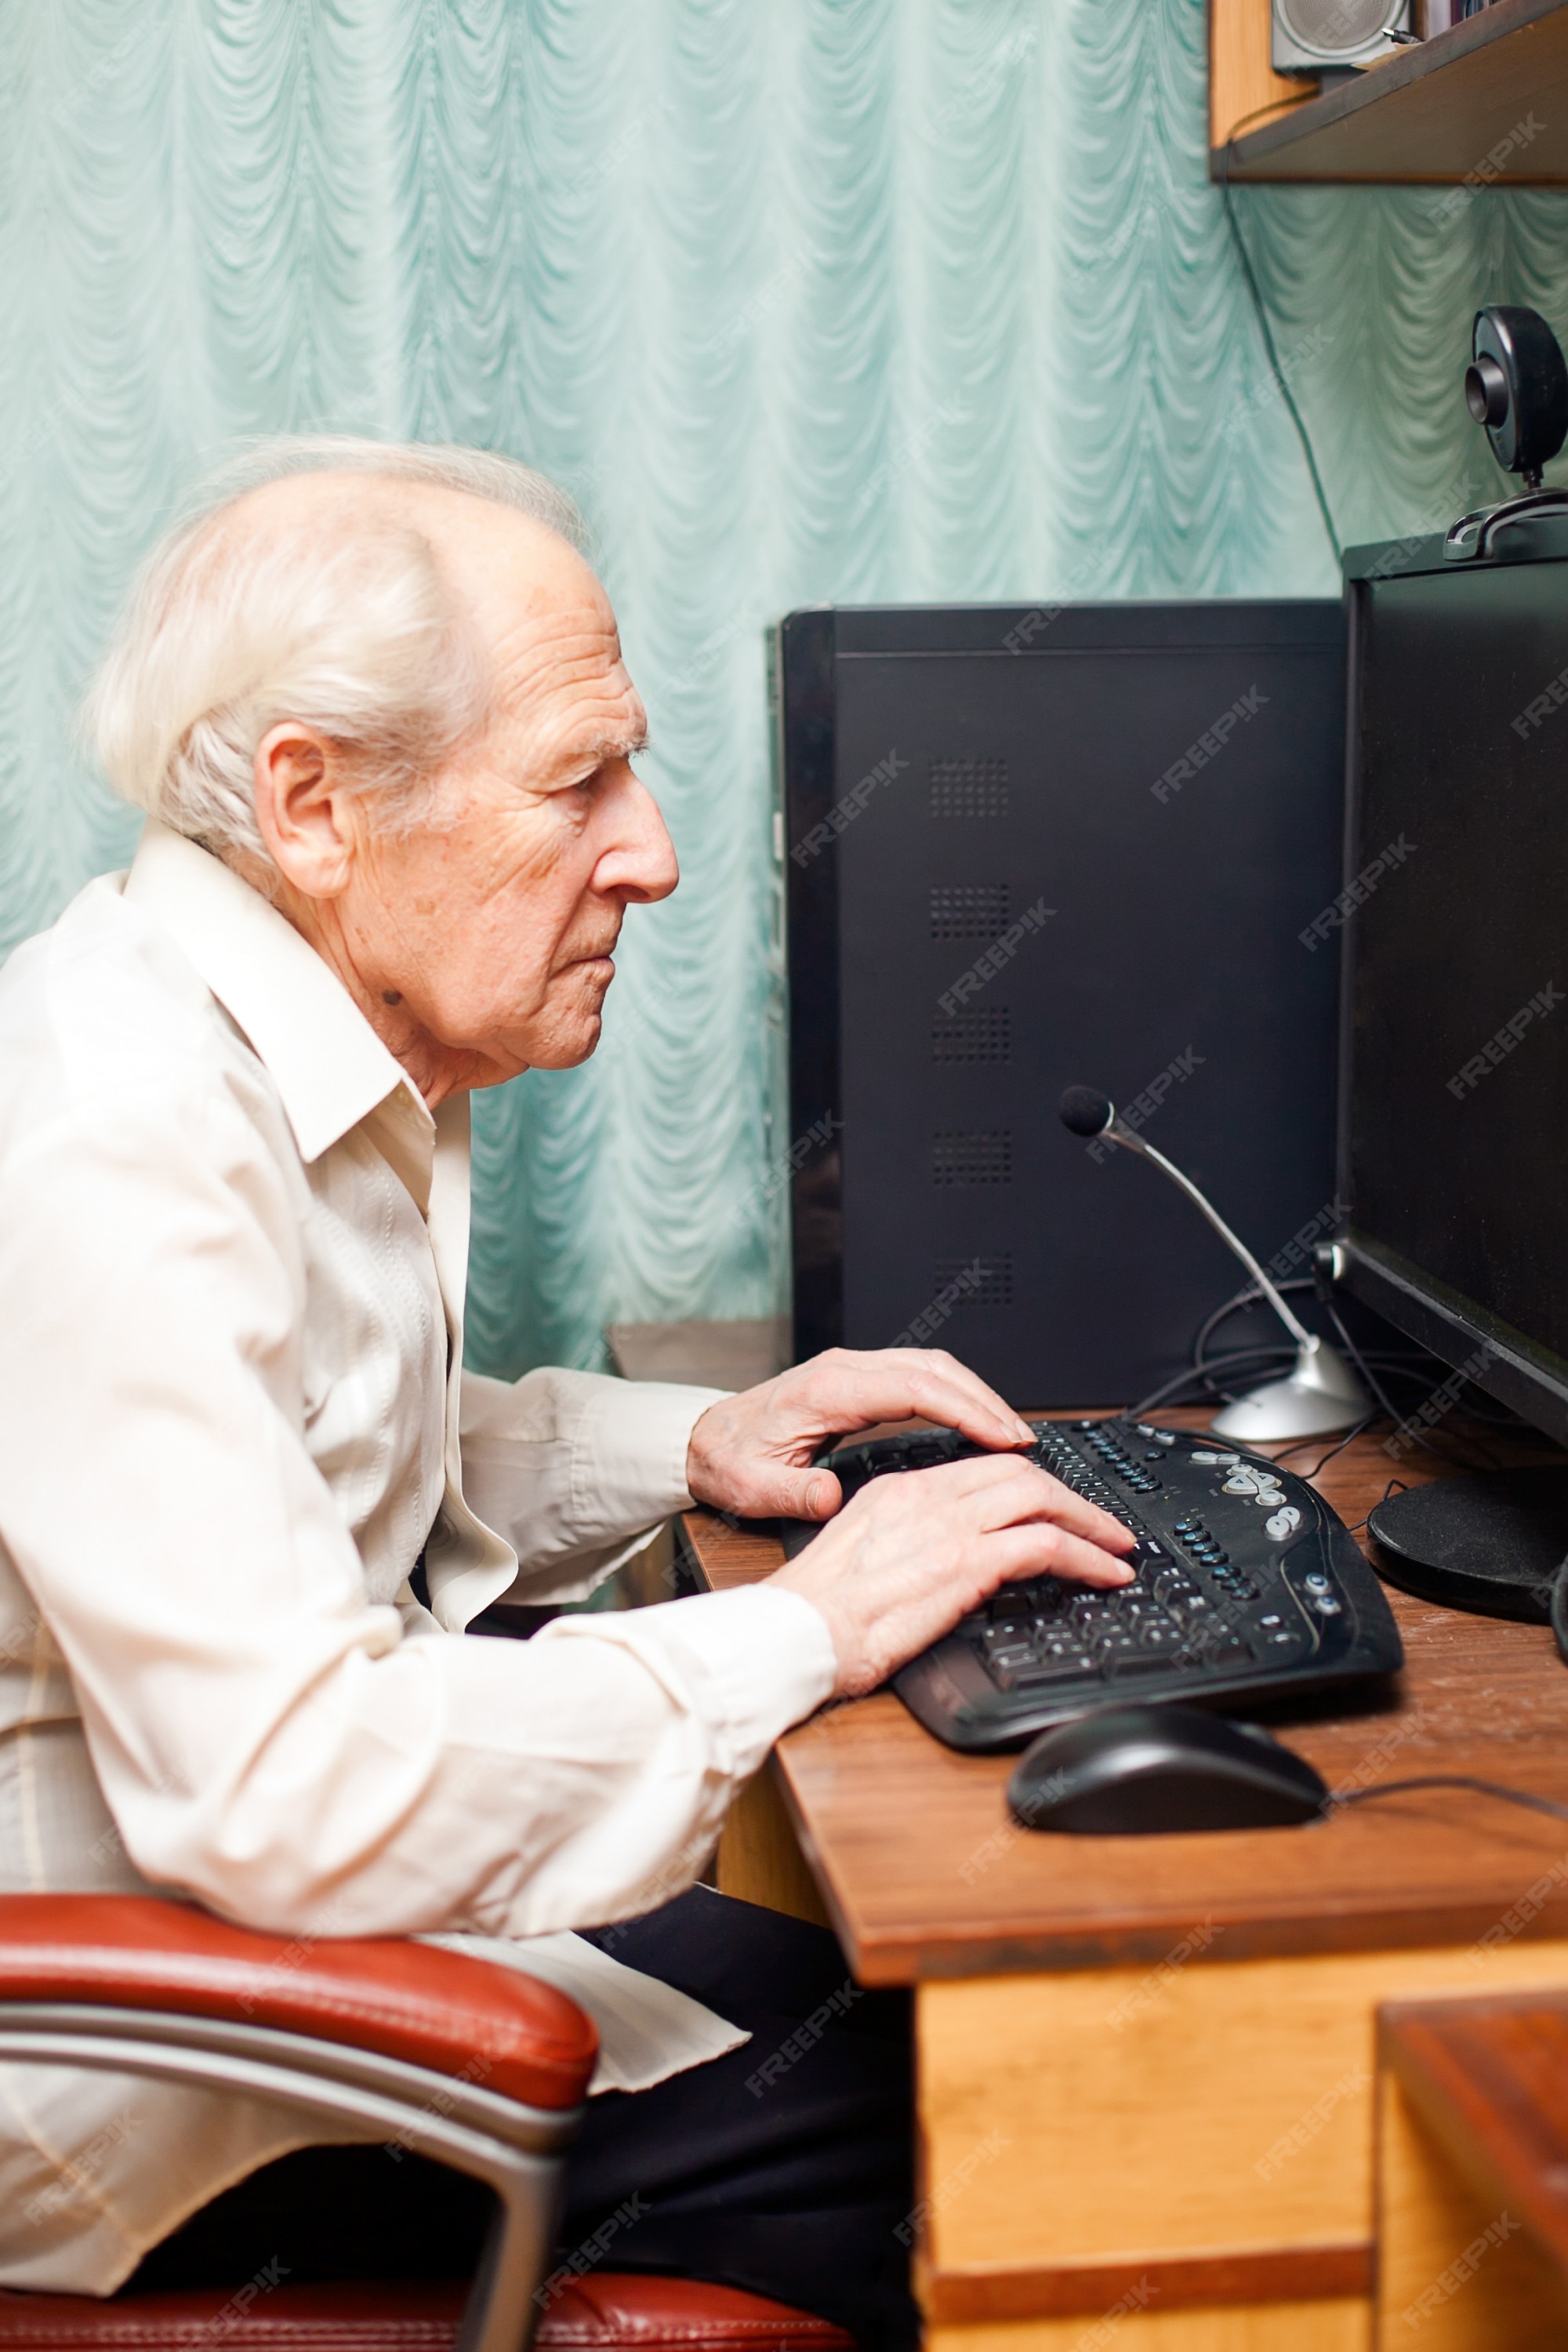 old-man-working-computer_167689-1164.jpg